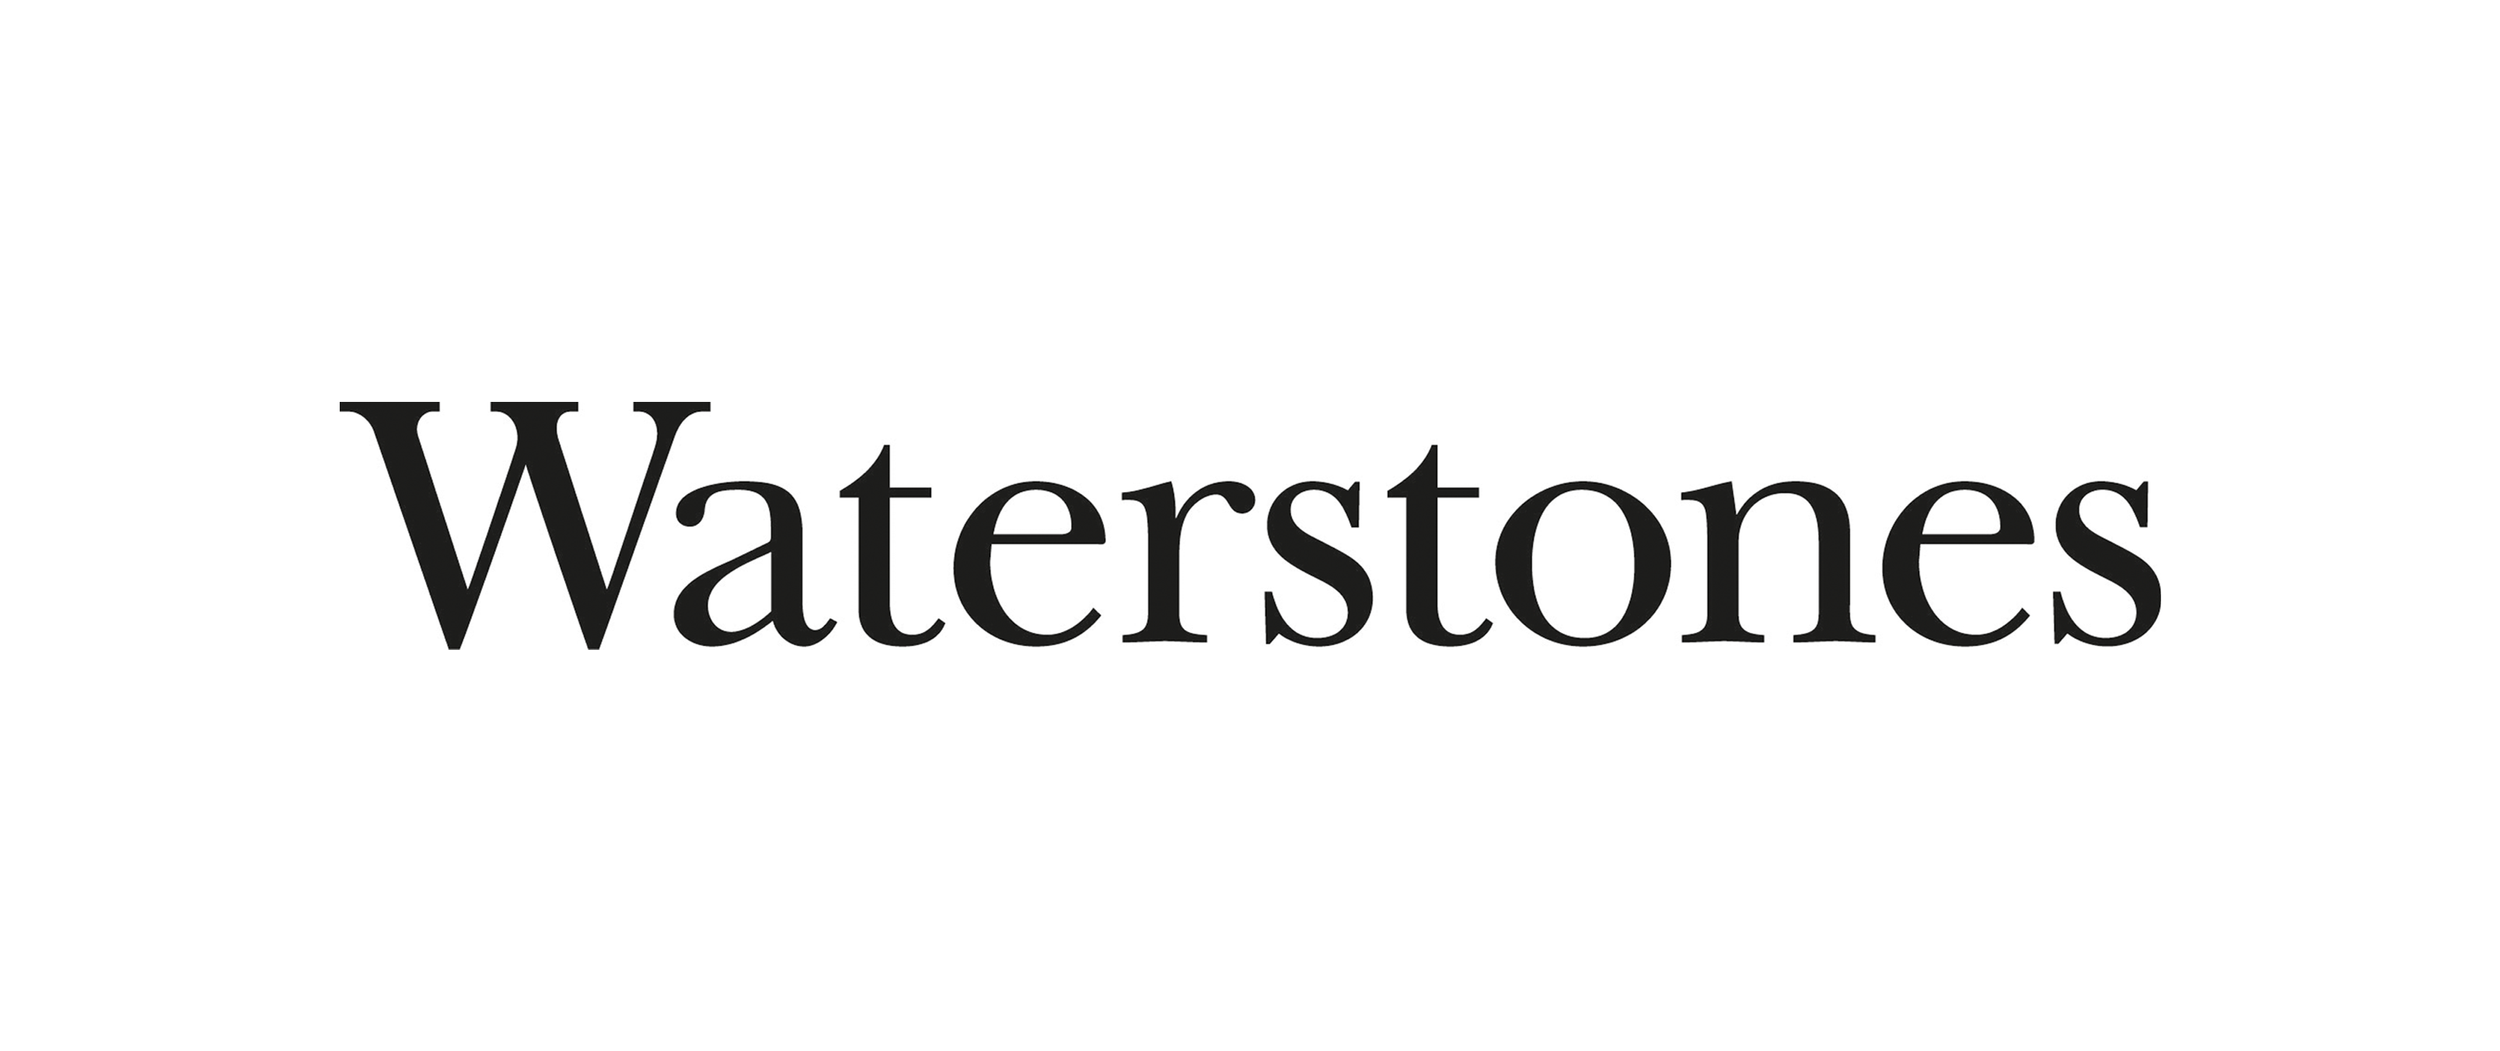 Waterstones Logo Buy Books.png